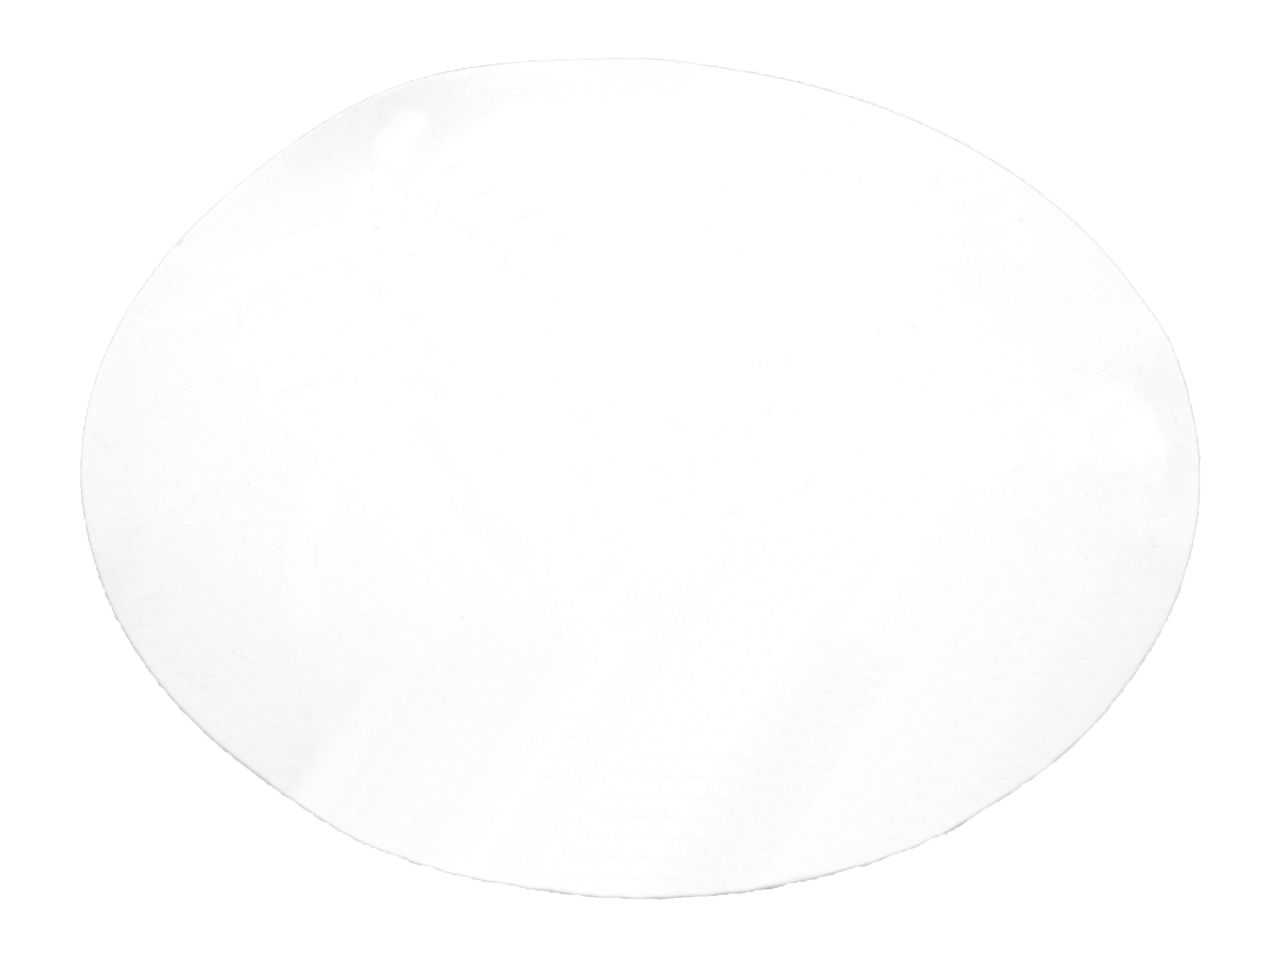 Fondantpapier: Torten- & Cupcakesaufleger Blanko rund, Weiß, 1 Bogen/48 Stück à 3 cm